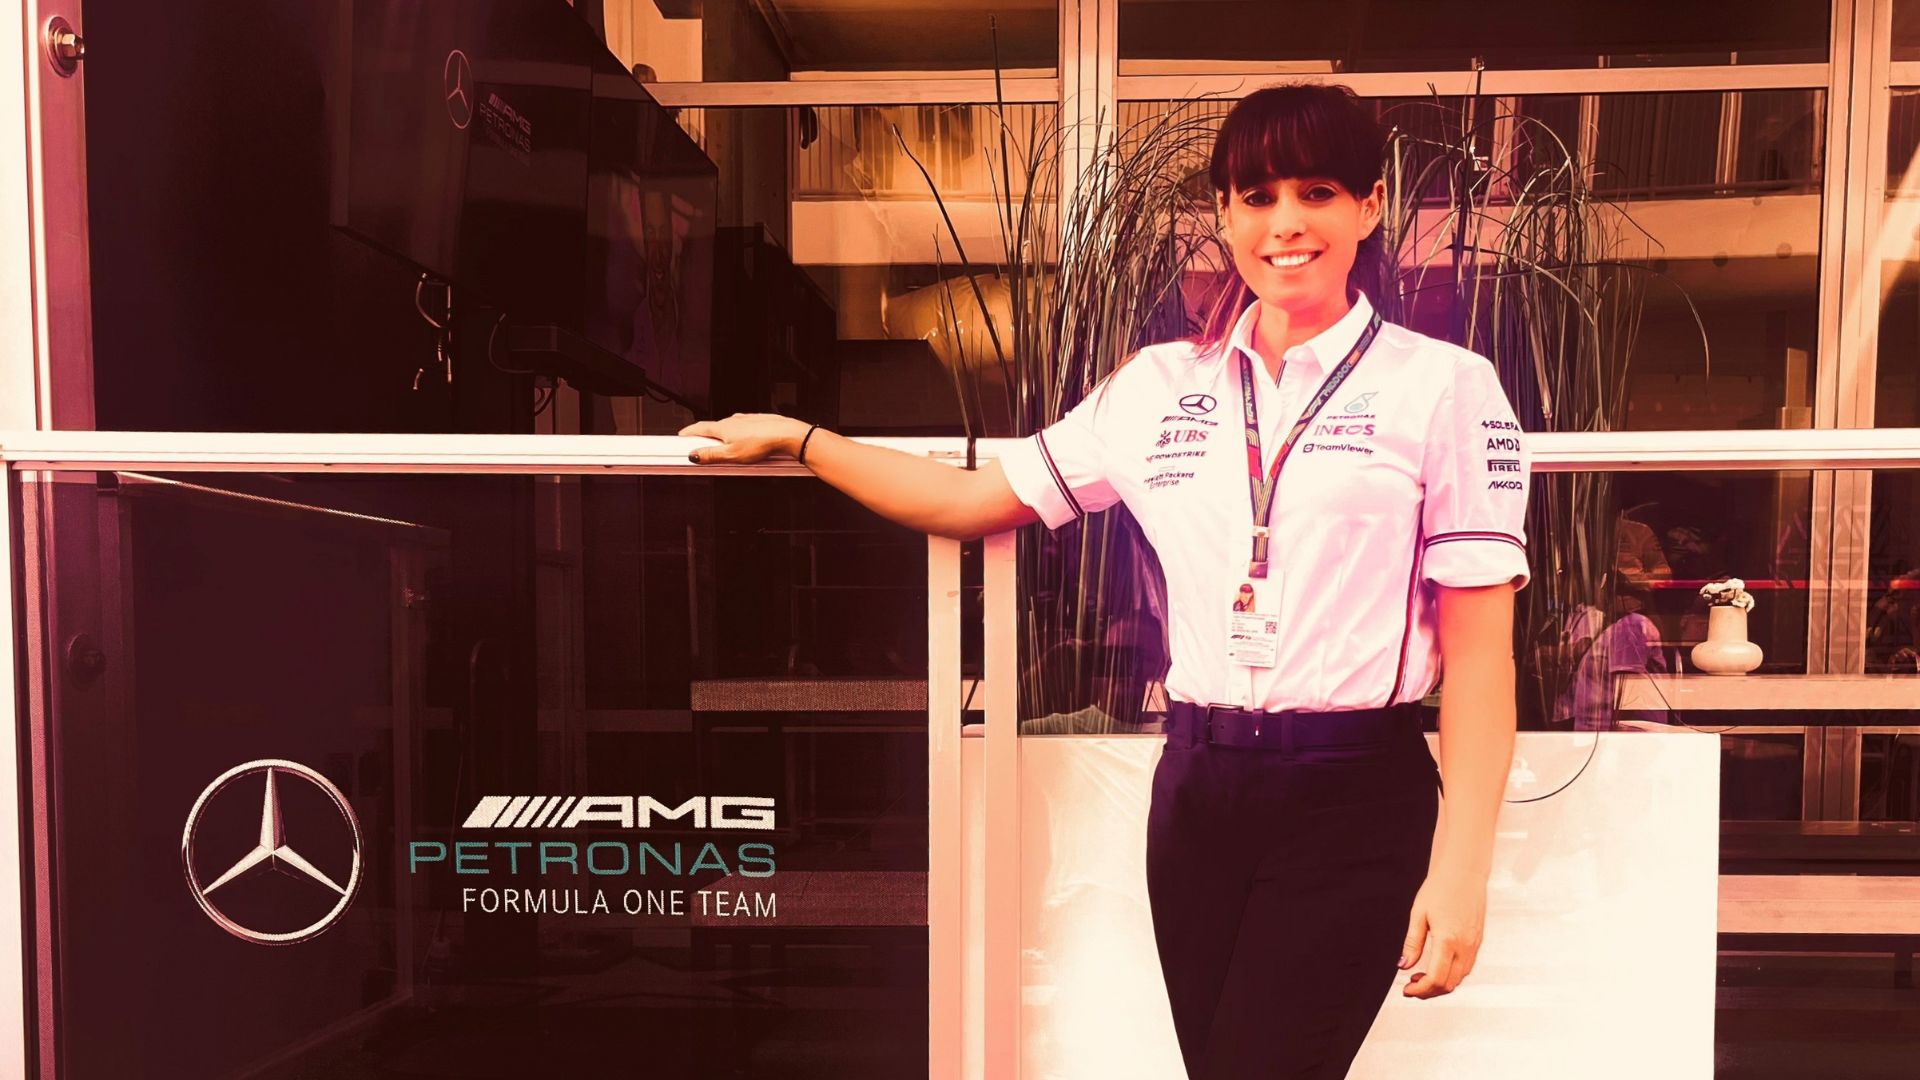 Tracy McAdam smiling next to the AGM Petronas Formula 1 Mercedes team sign in mercedes uniform 